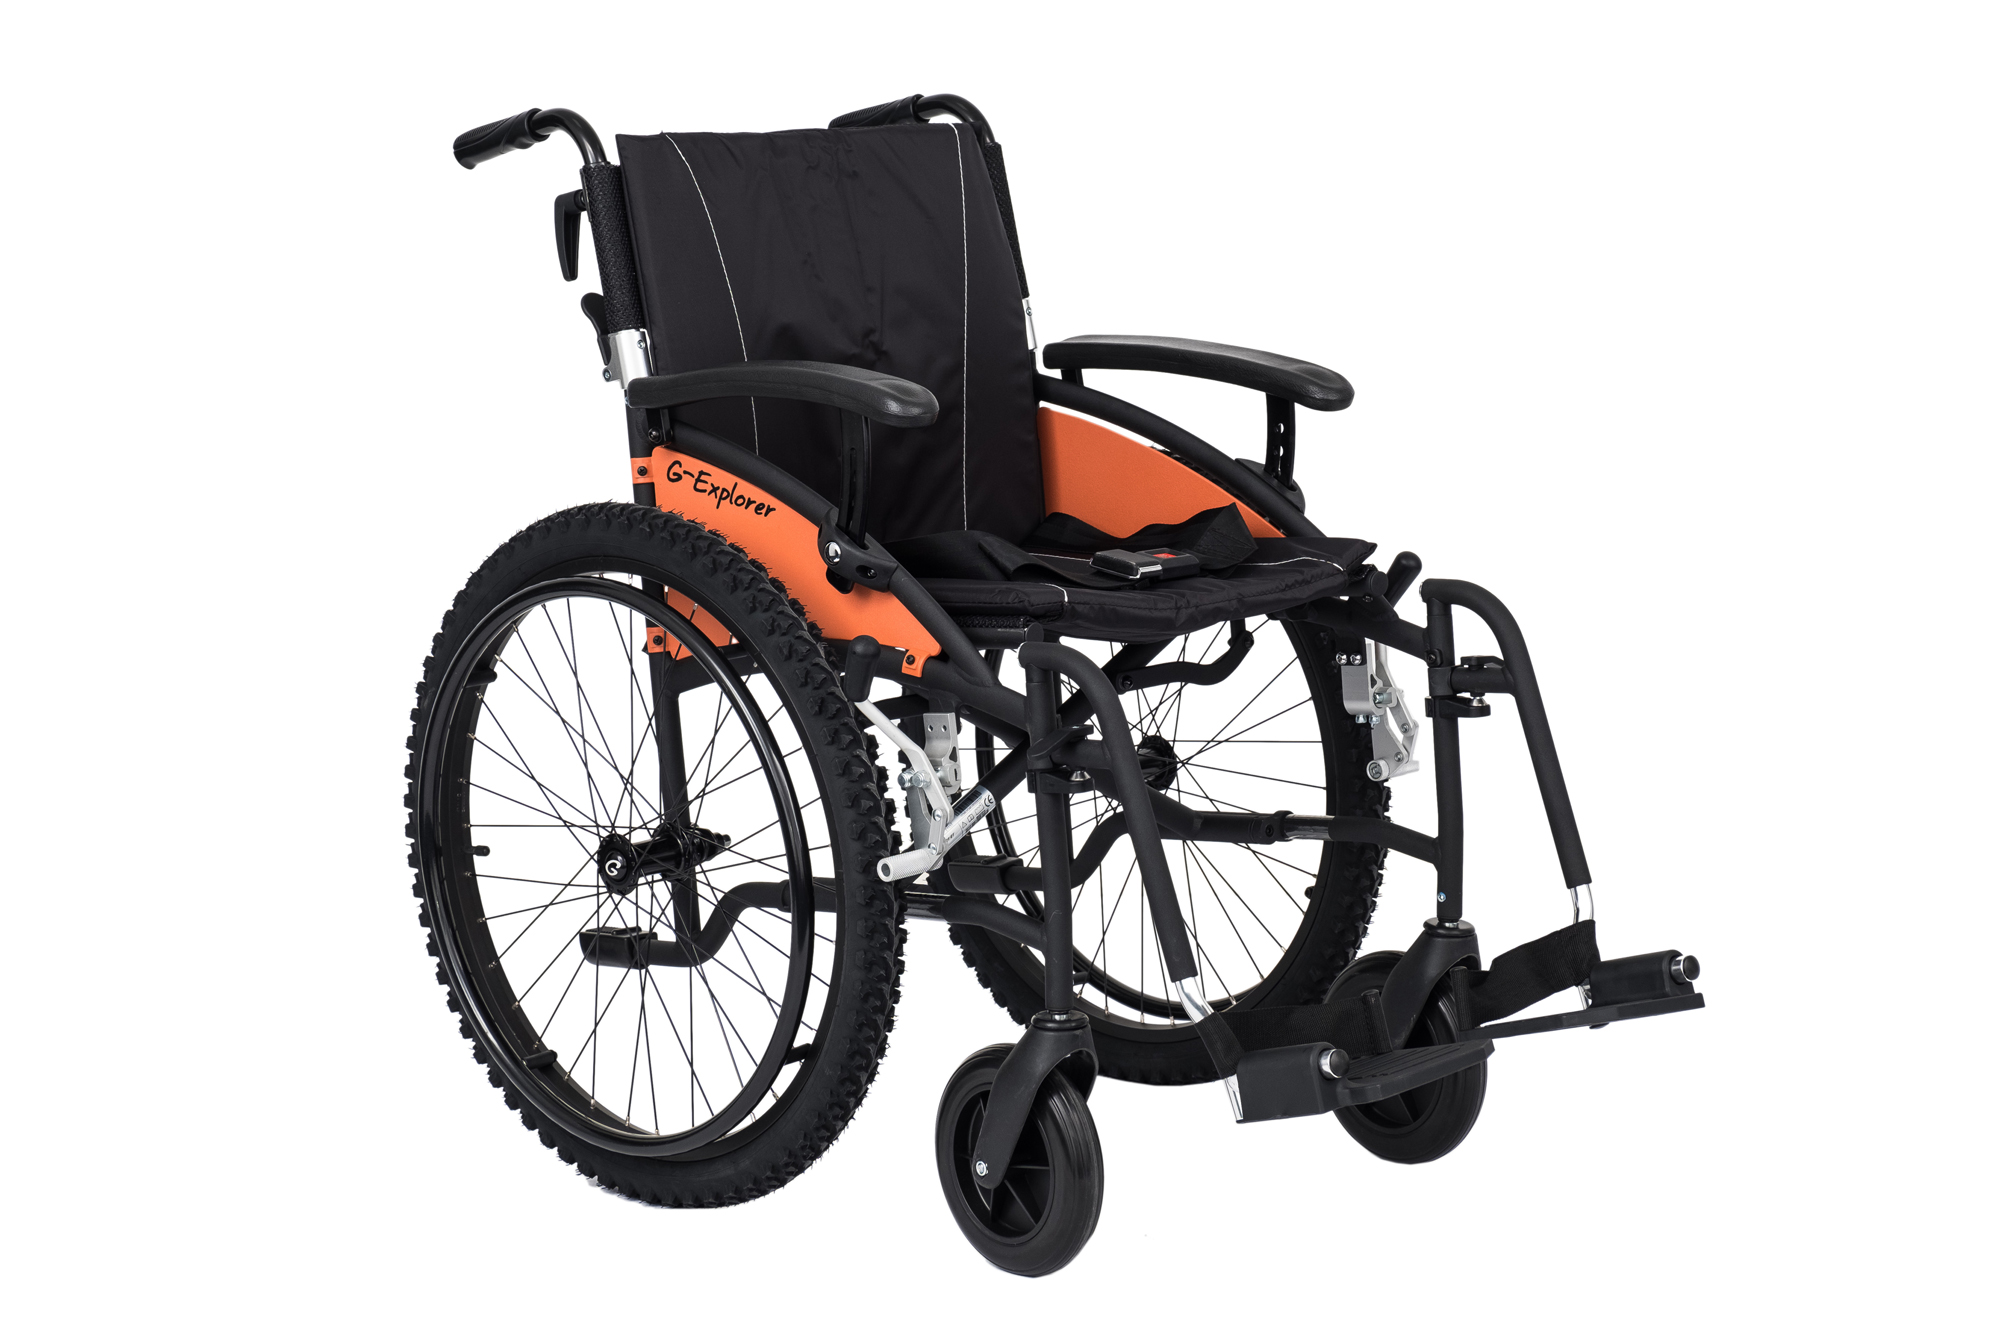 Van Os, G-Explorer self-propelled wheelchair